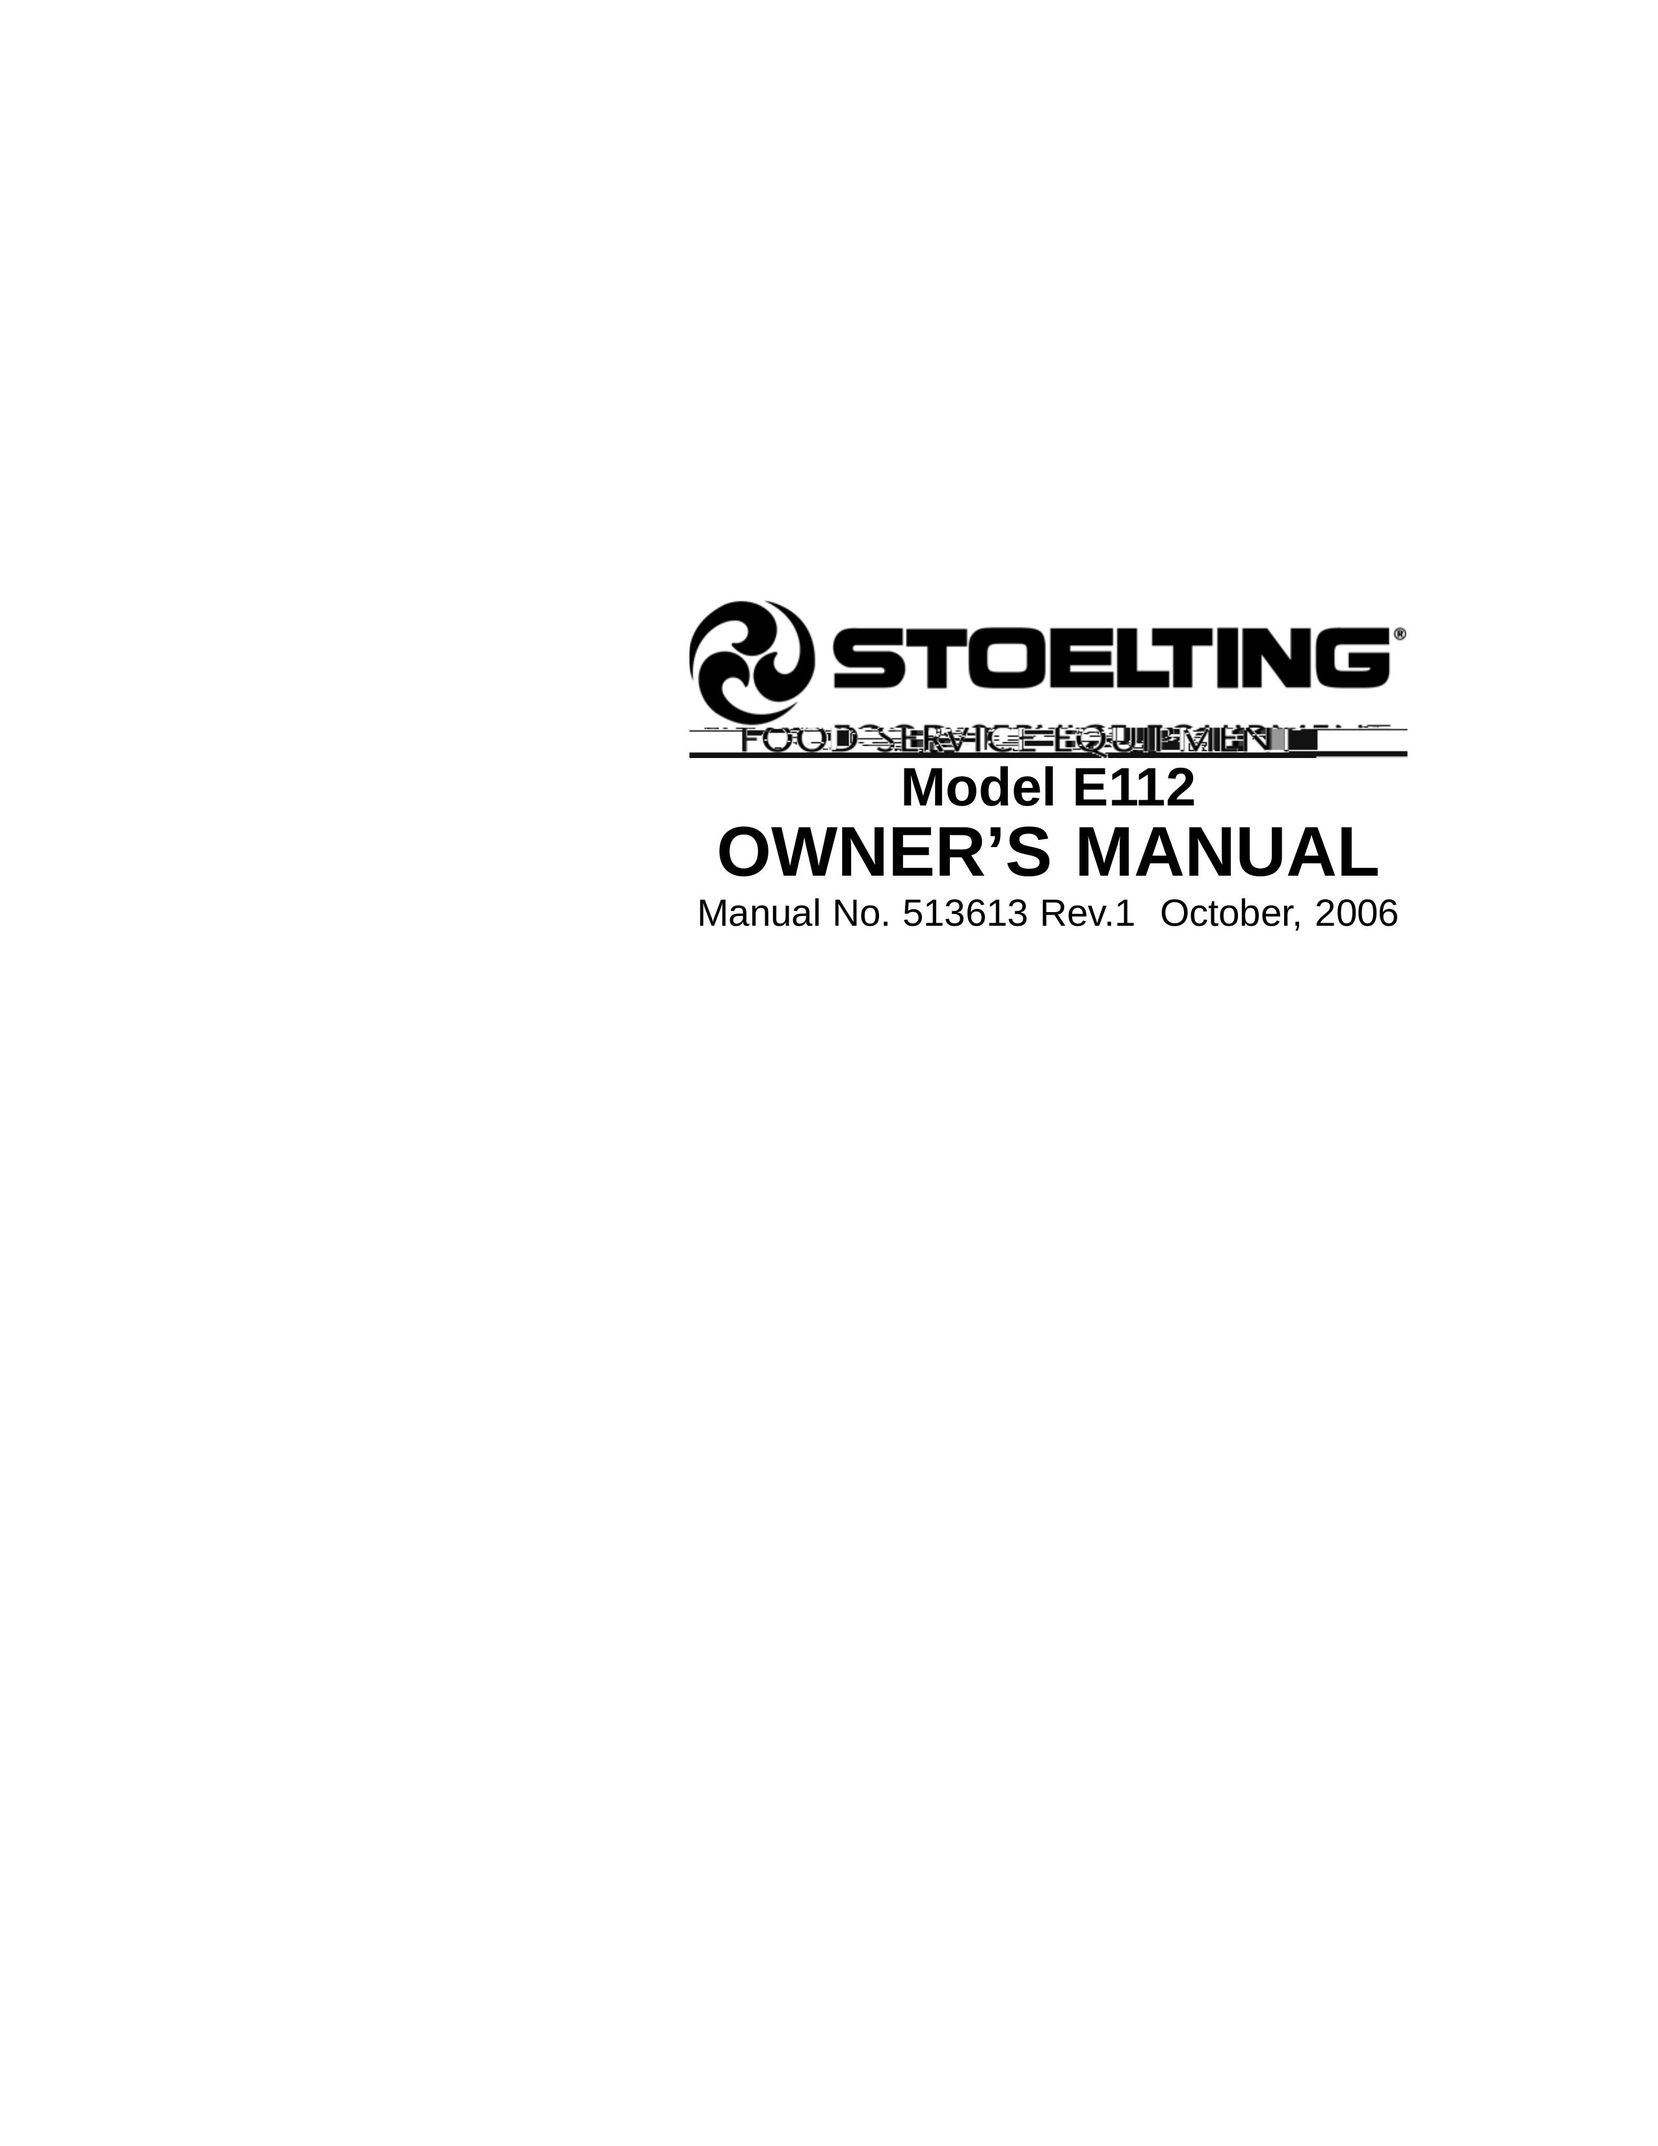 Stoelting E112 Freezer User Manual